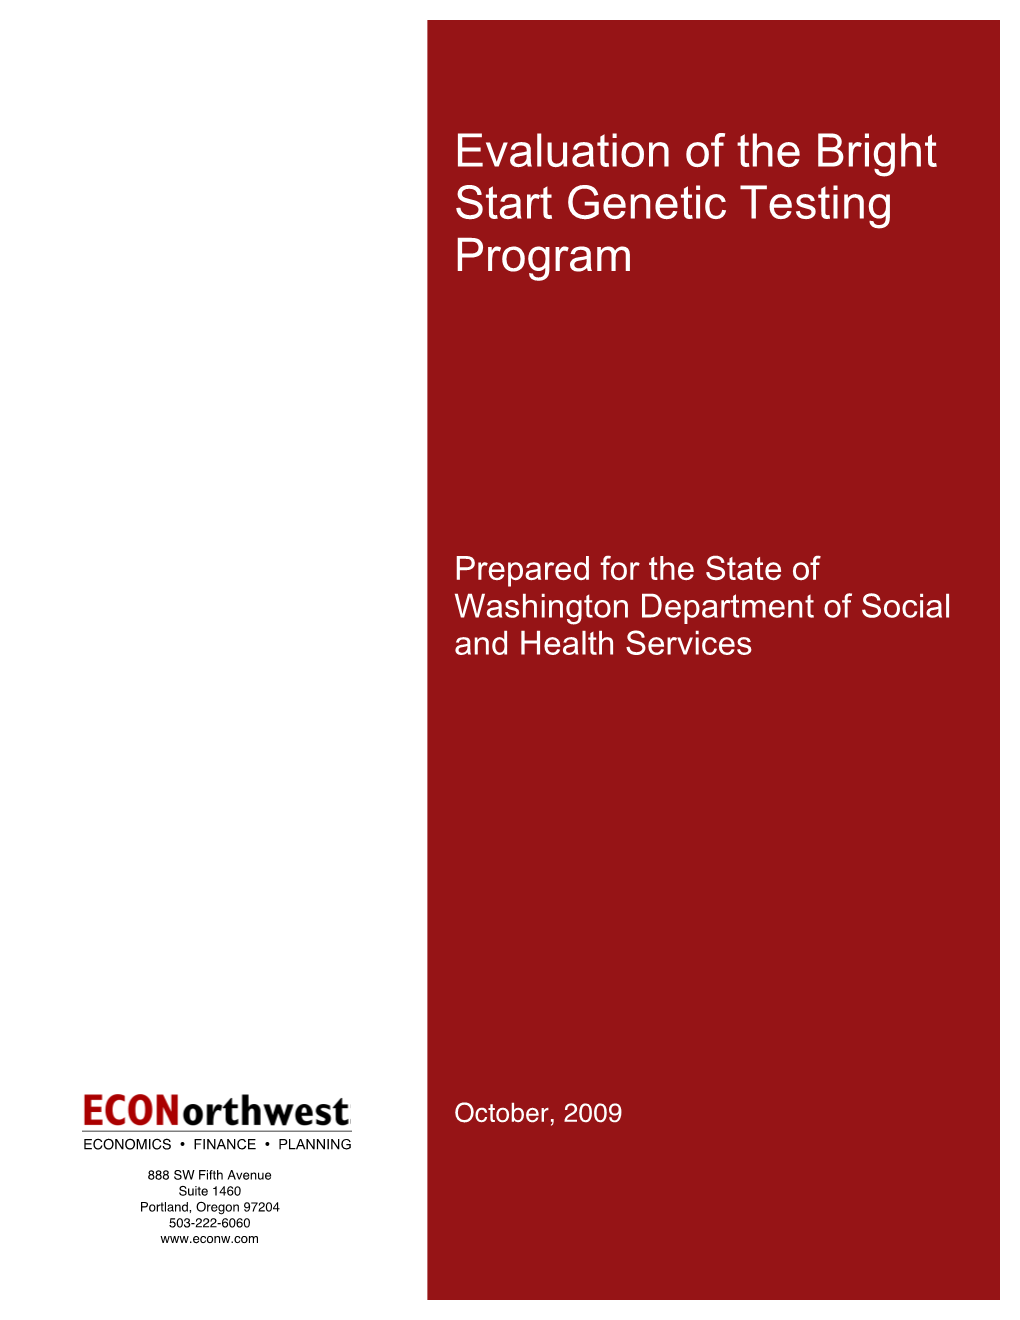 Evaluation of the Bright Start Genetic Testing Program